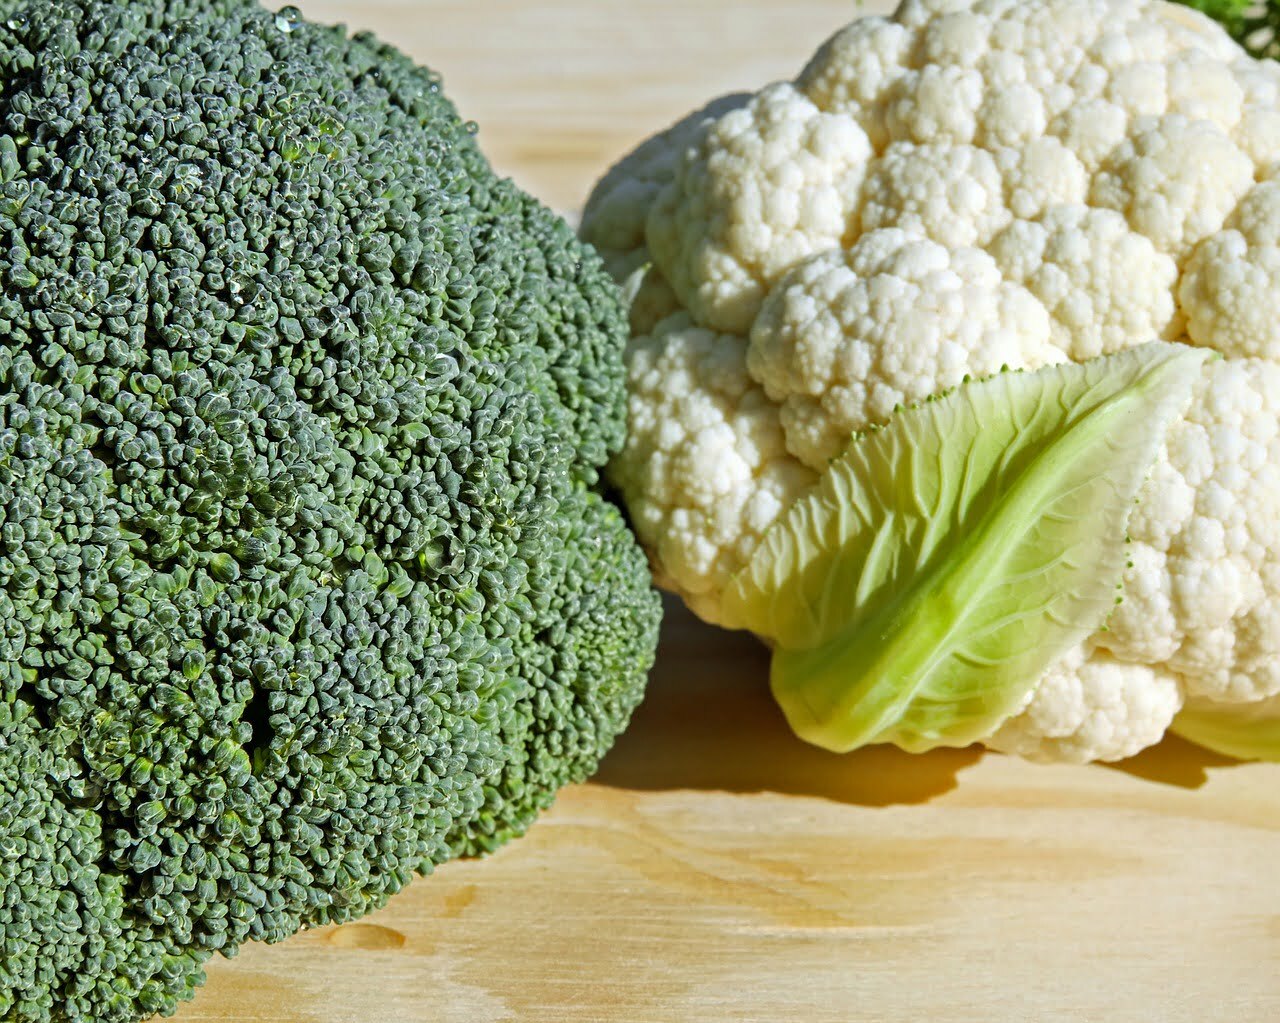 Cauliflower and Broccoli heads on table